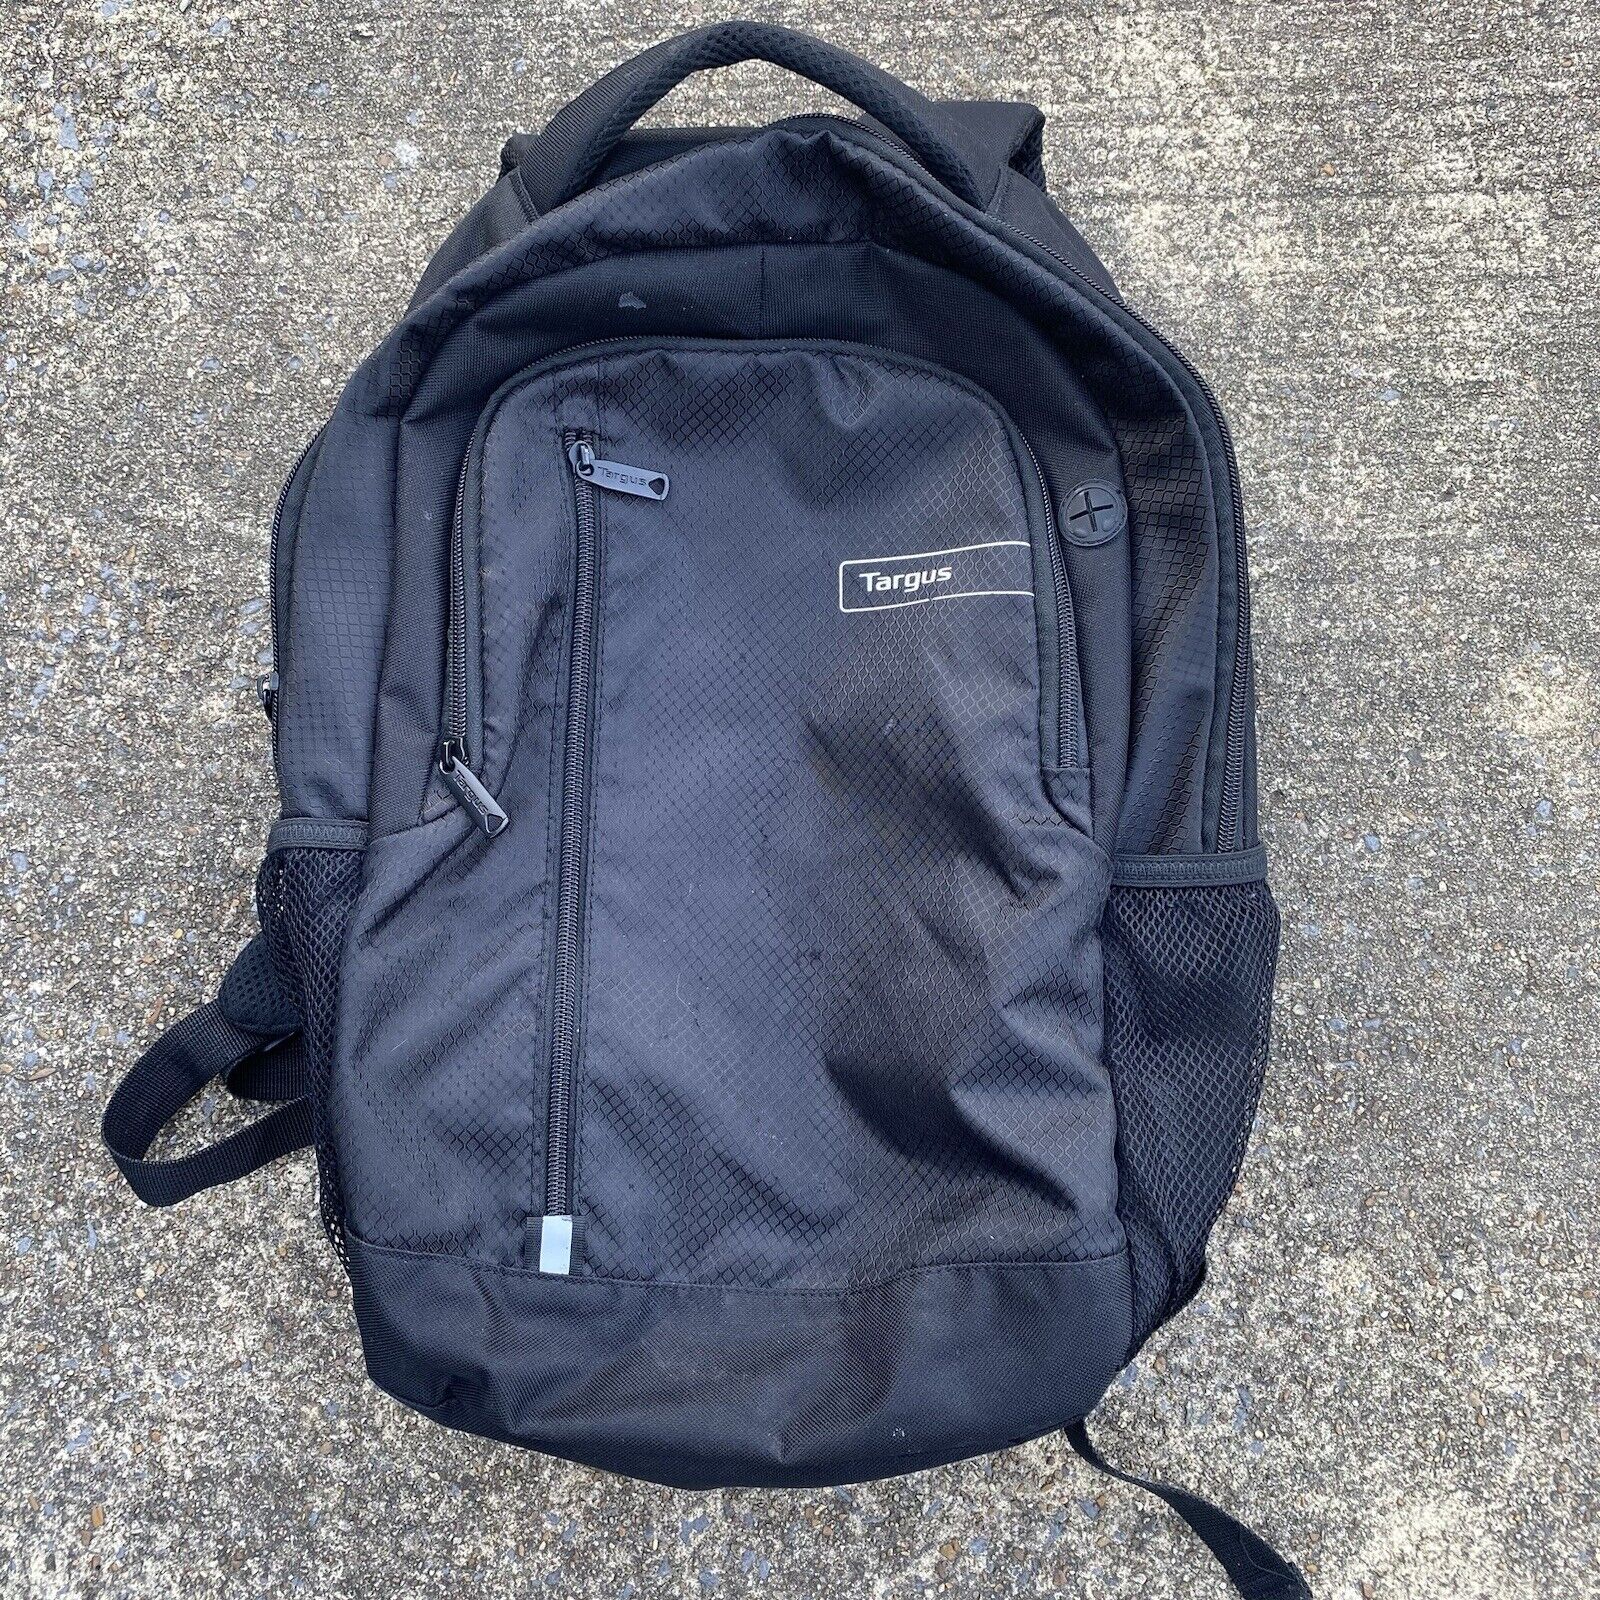 Targus Sport Backpack Laptop Bag Black Carry On Waterproof SEE ALL PICS